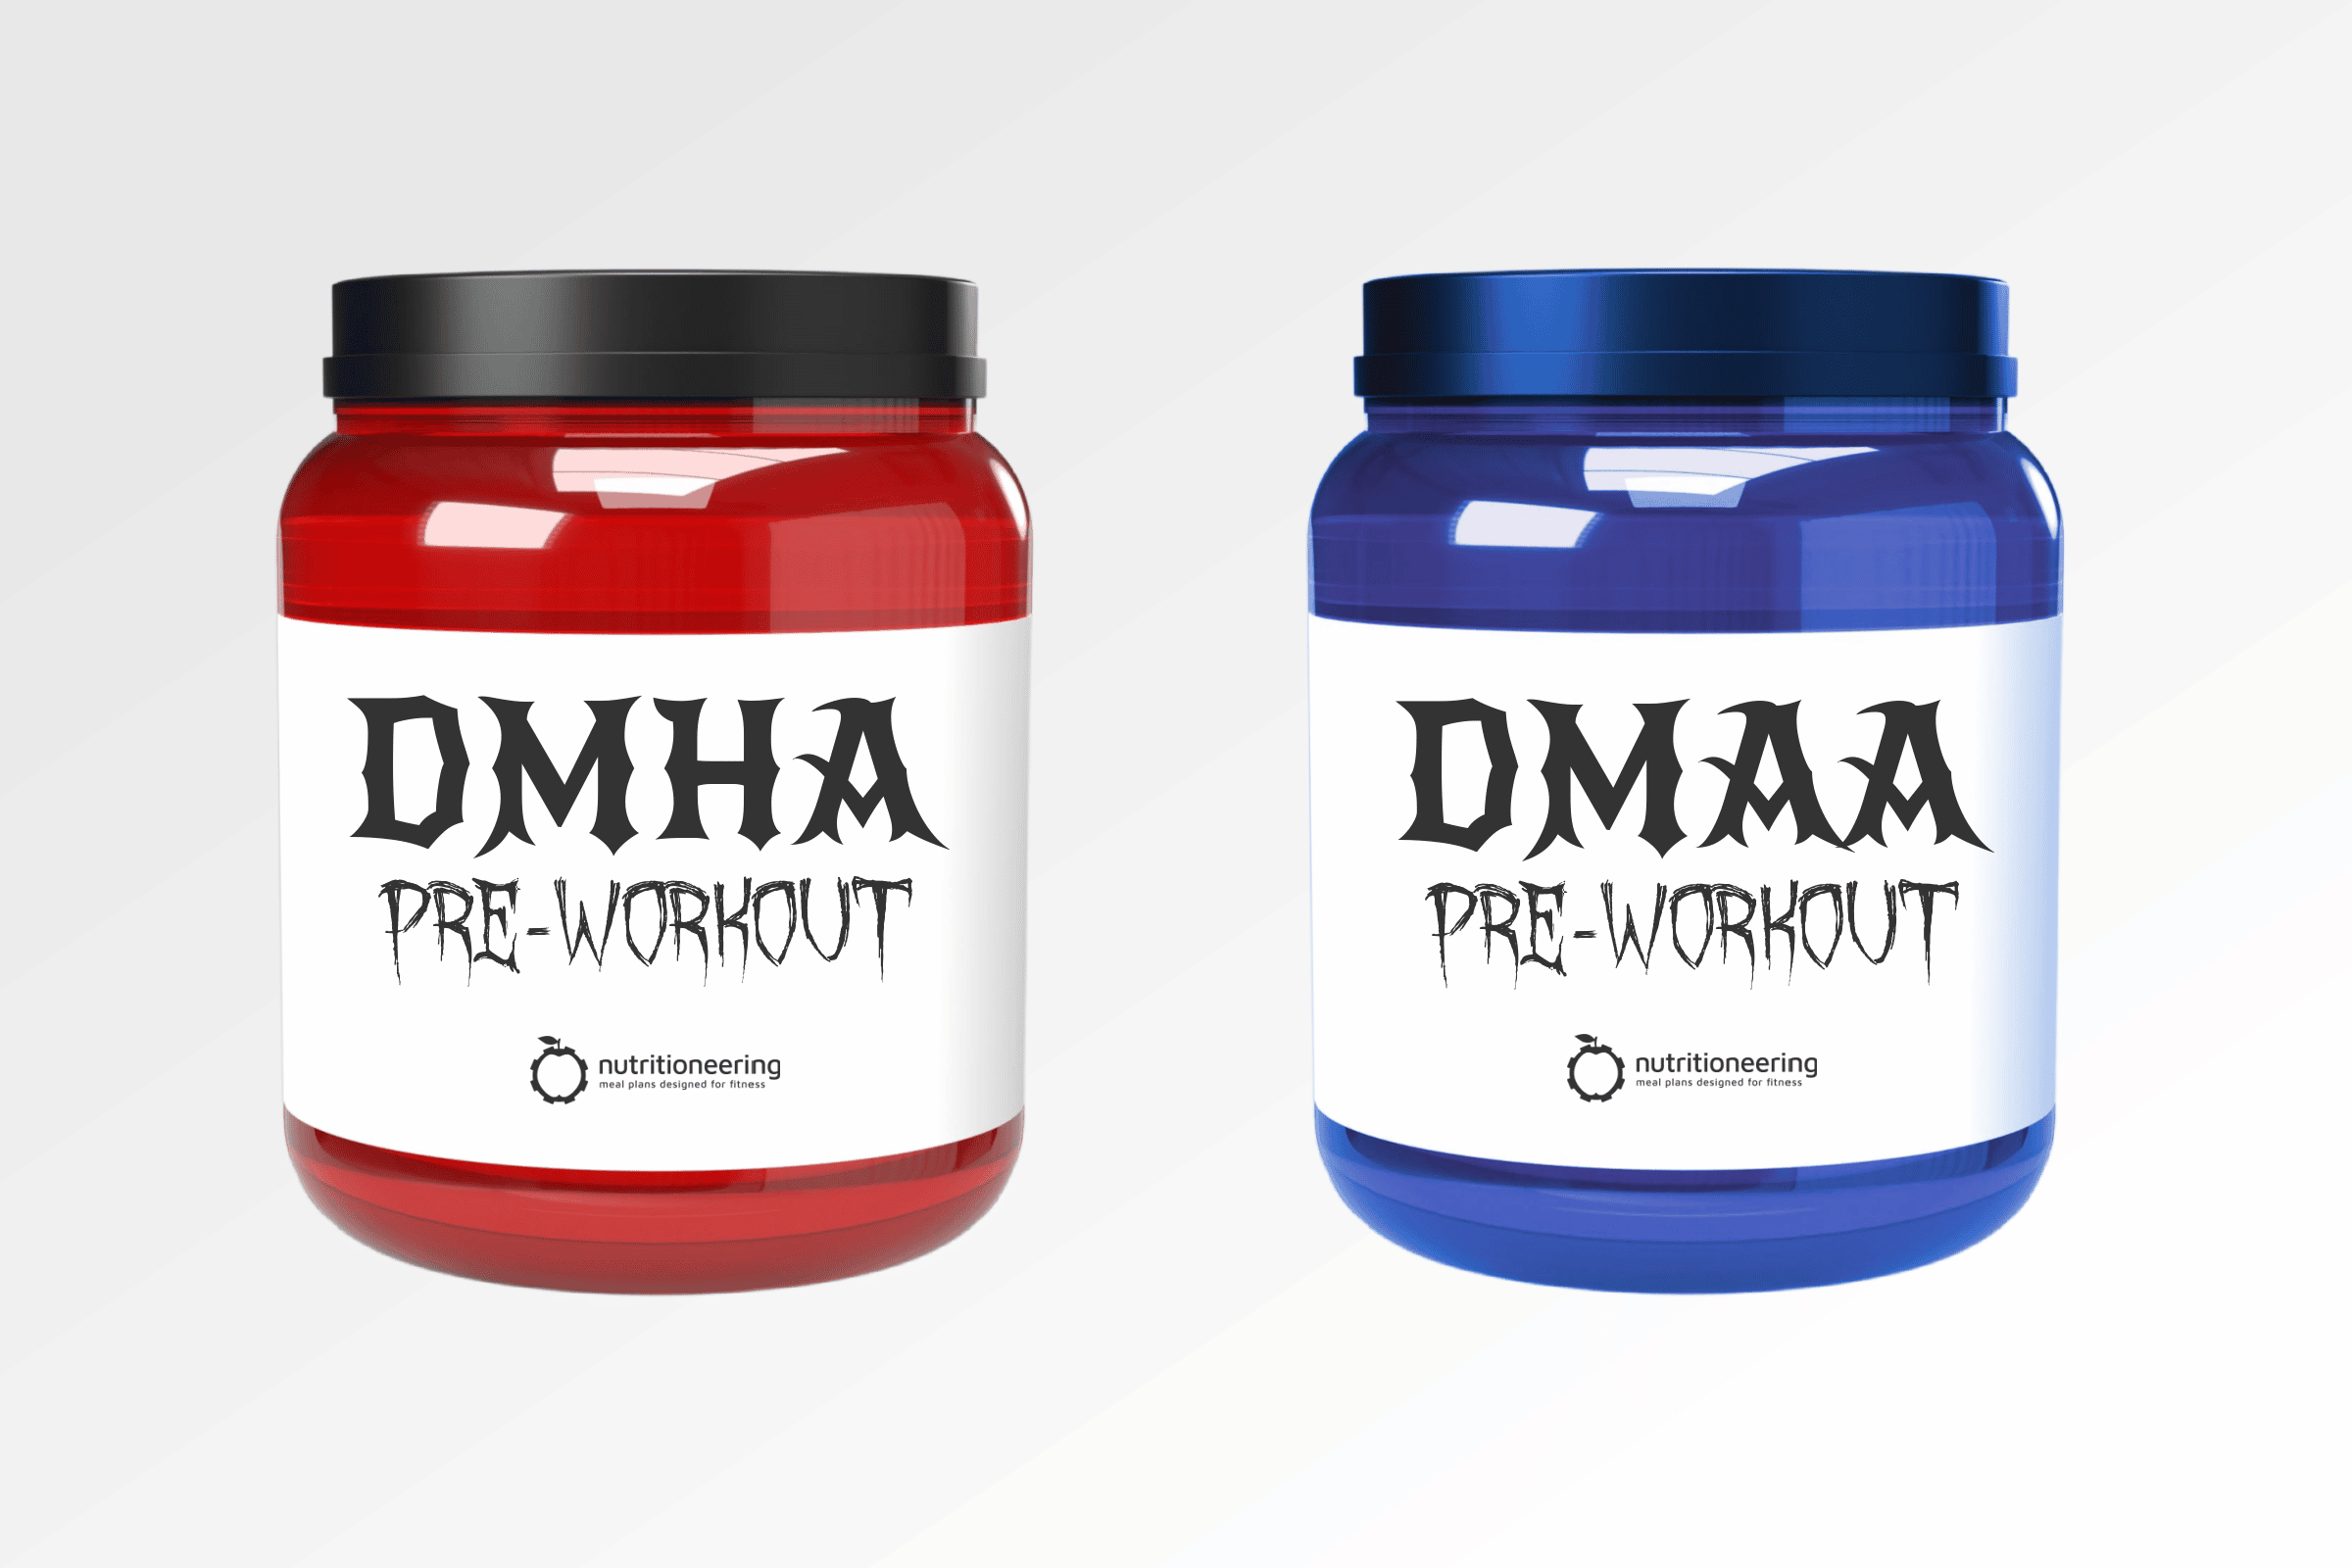 DMHA vs DMAA Pre Workout